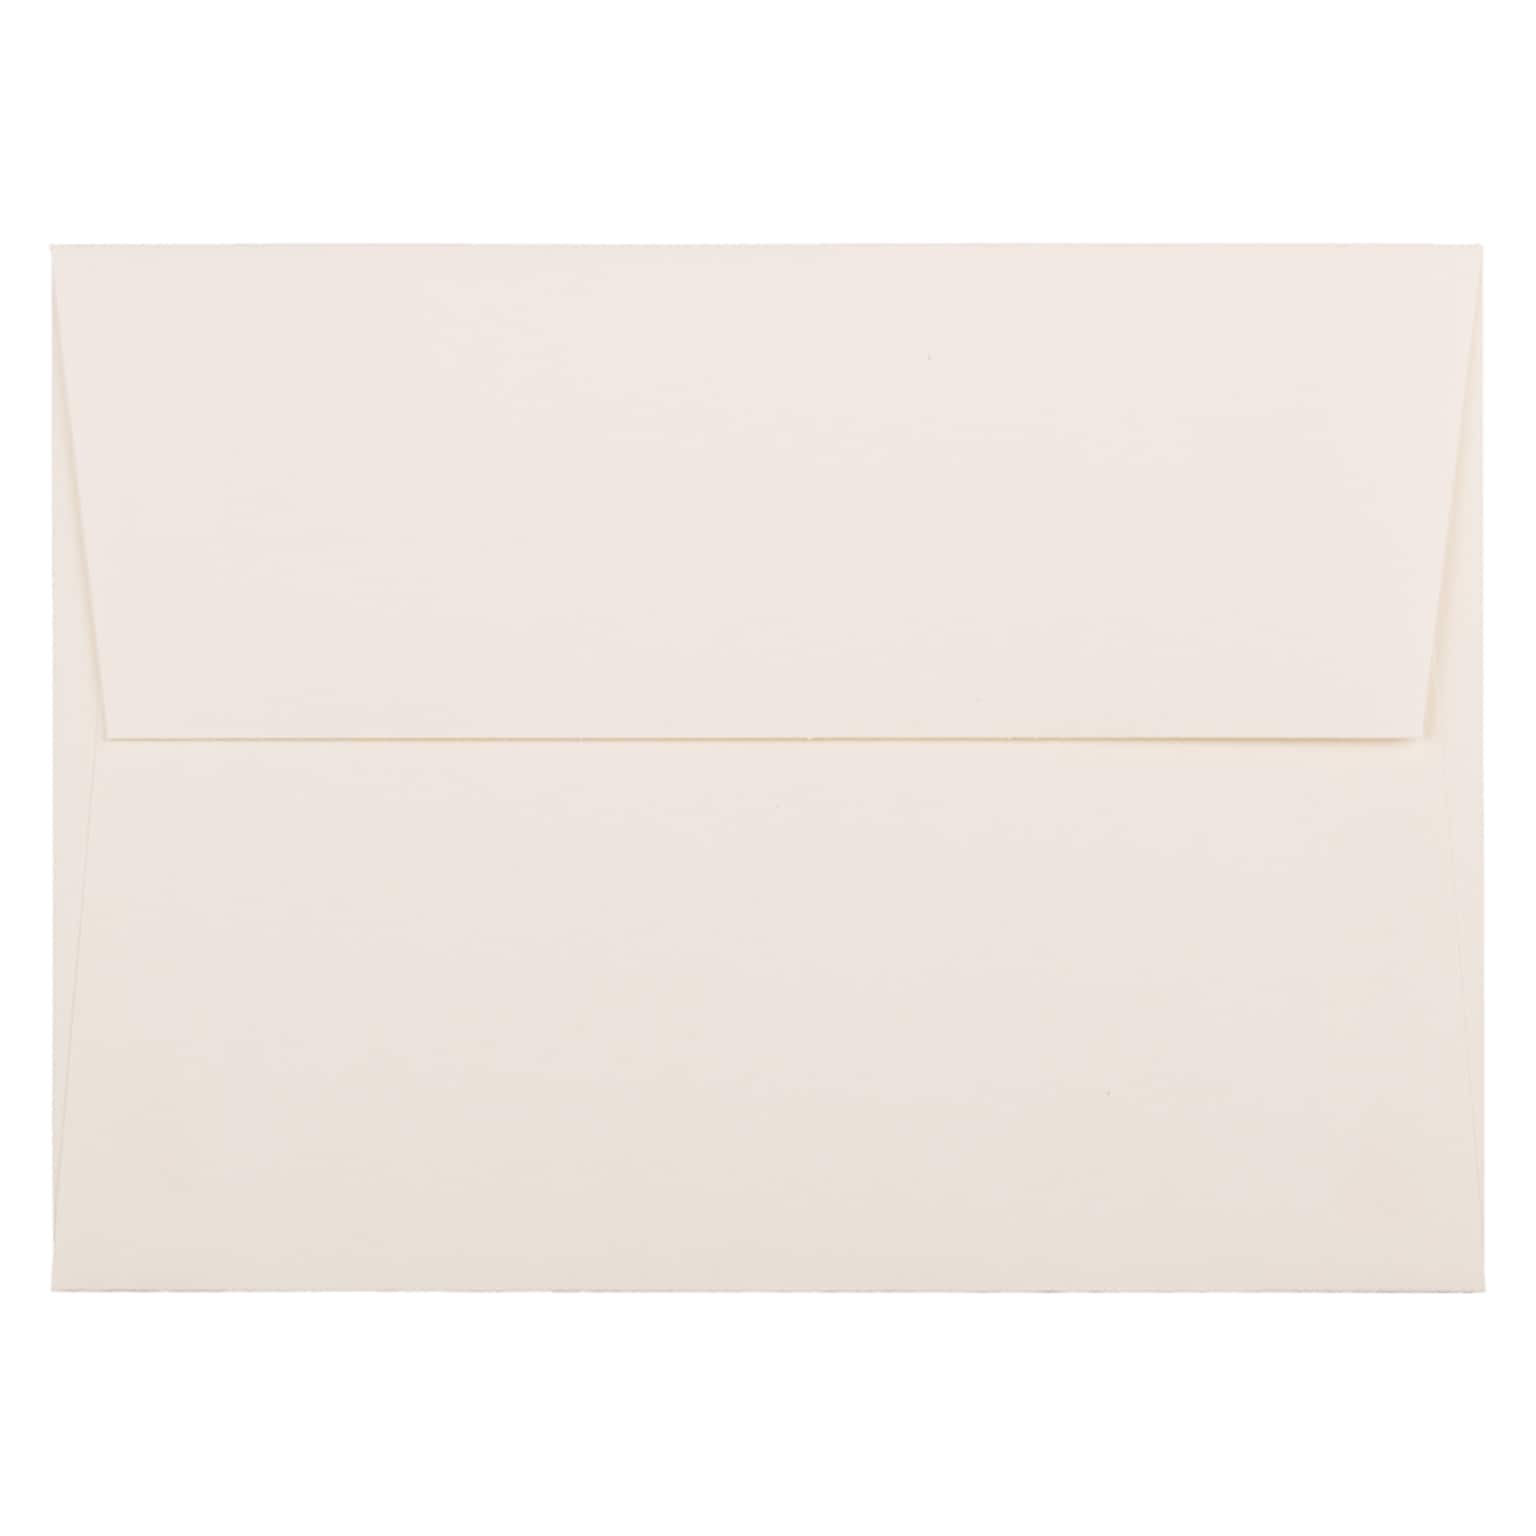 JAM Paper® A7 Strathmore Invitation Envelopes, 5.25 x 7.25, Natural White Wove, 25/Pack (44507)